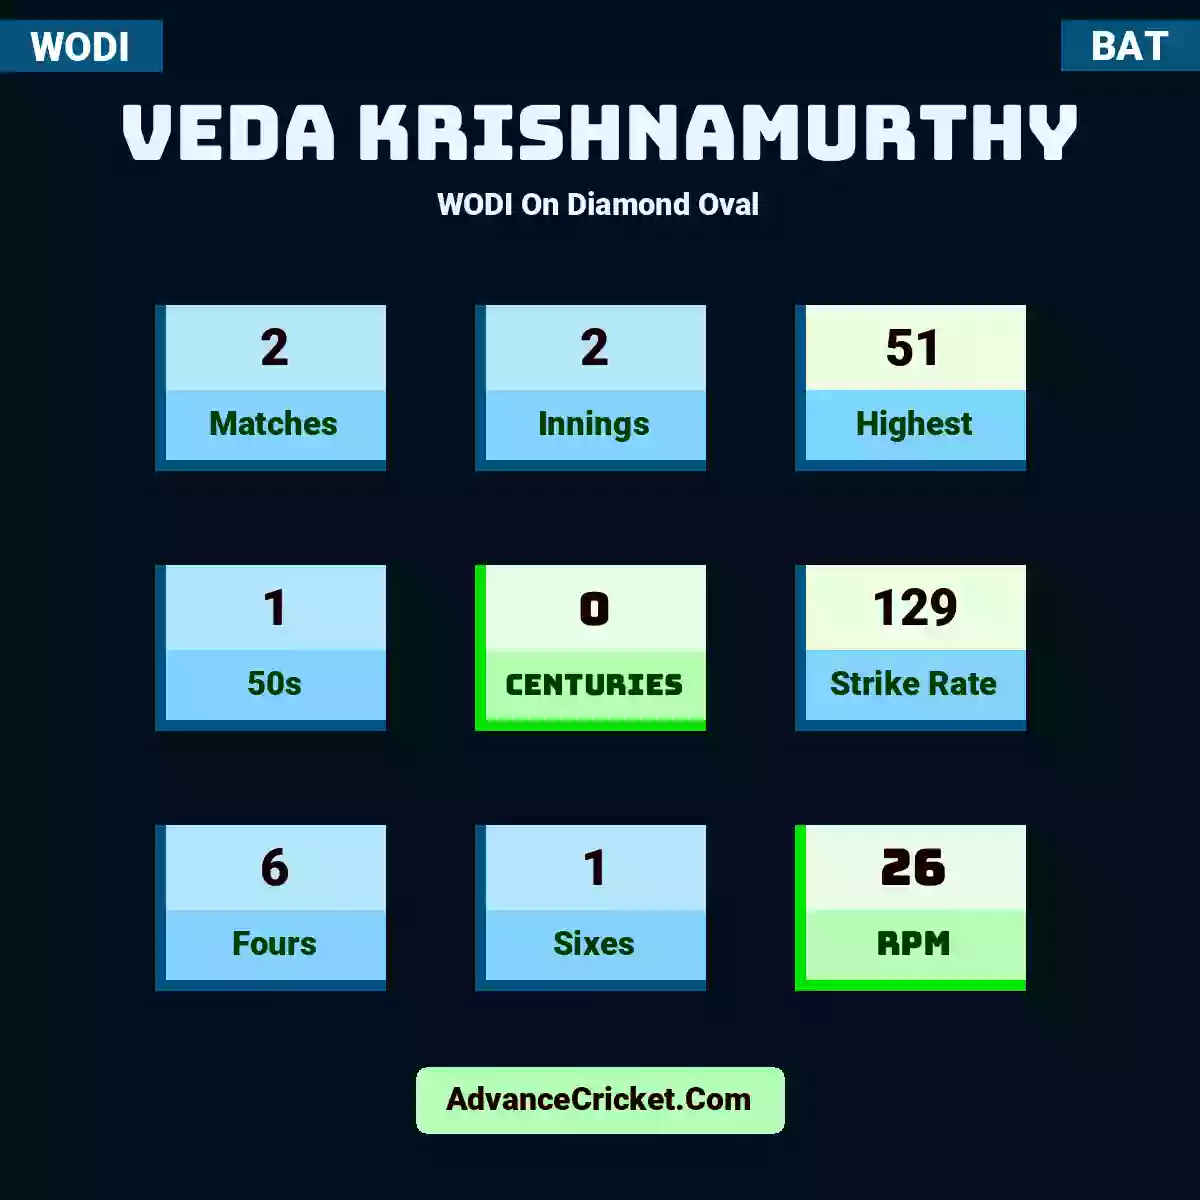 Veda Krishnamurthy WODI  On Diamond Oval, Veda Krishnamurthy played 2 matches, scored 51 runs as highest, 1 half-centuries, and 0 centuries, with a strike rate of 129. V.Krishnamurthy hit 6 fours and 1 sixes, with an RPM of 26.